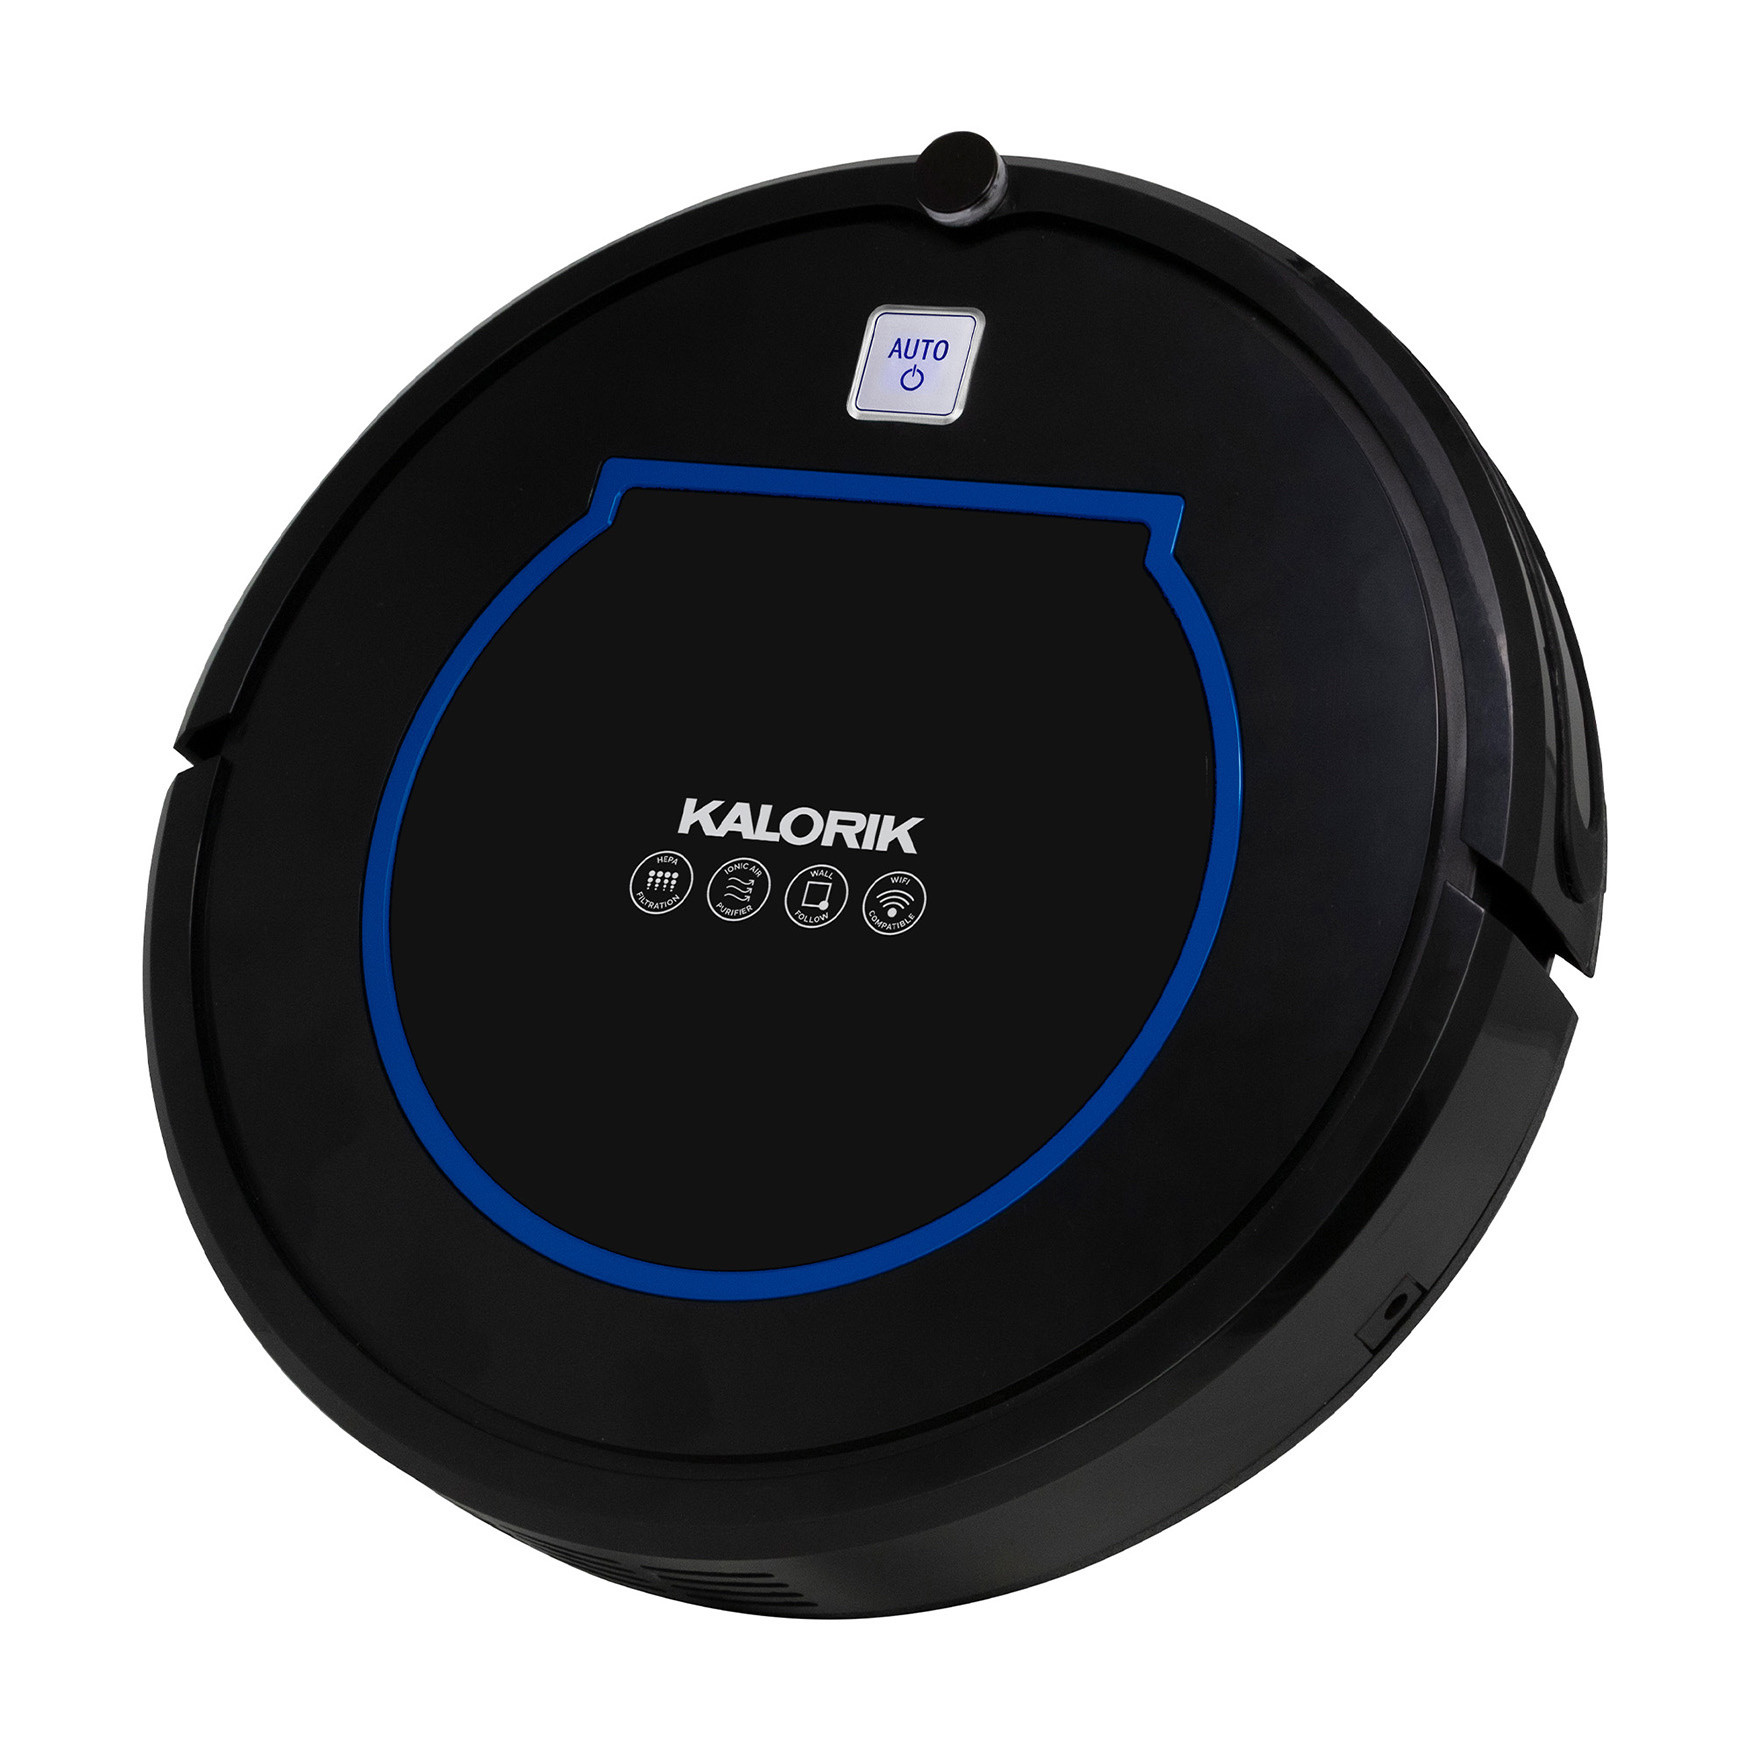 Kalorik Home Smart Robot Vacuum Pro With Ionic Pure Air Technology